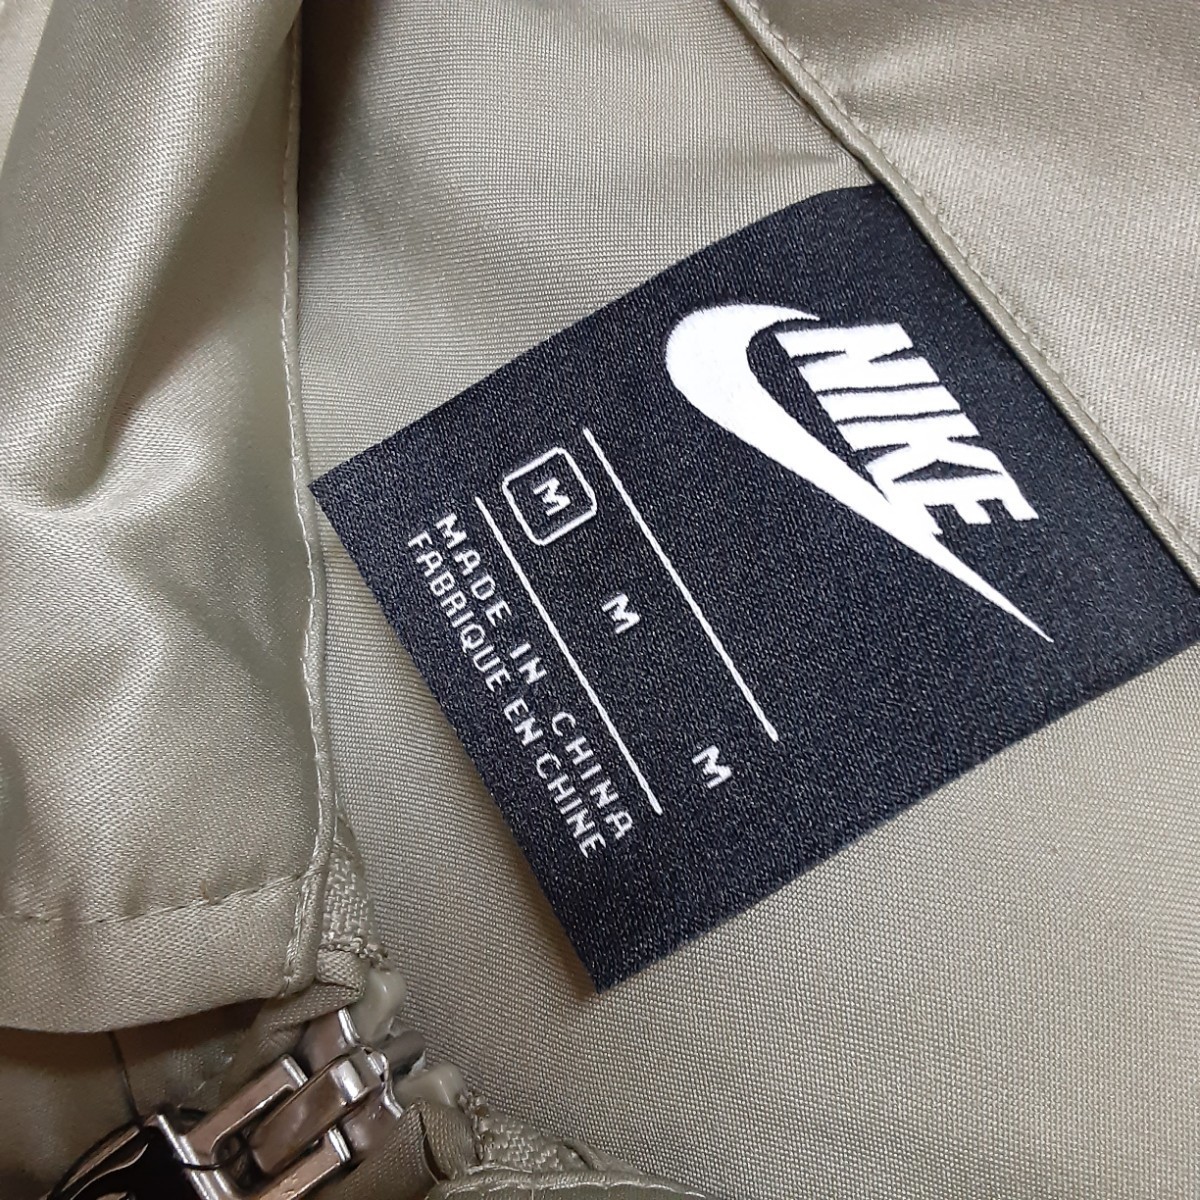  most price! new goods!.16500 jpy! last 1 point! masterpiece! Nike Icon crash high class satin long jacket coat! khaki M size waist adjustment possibility 